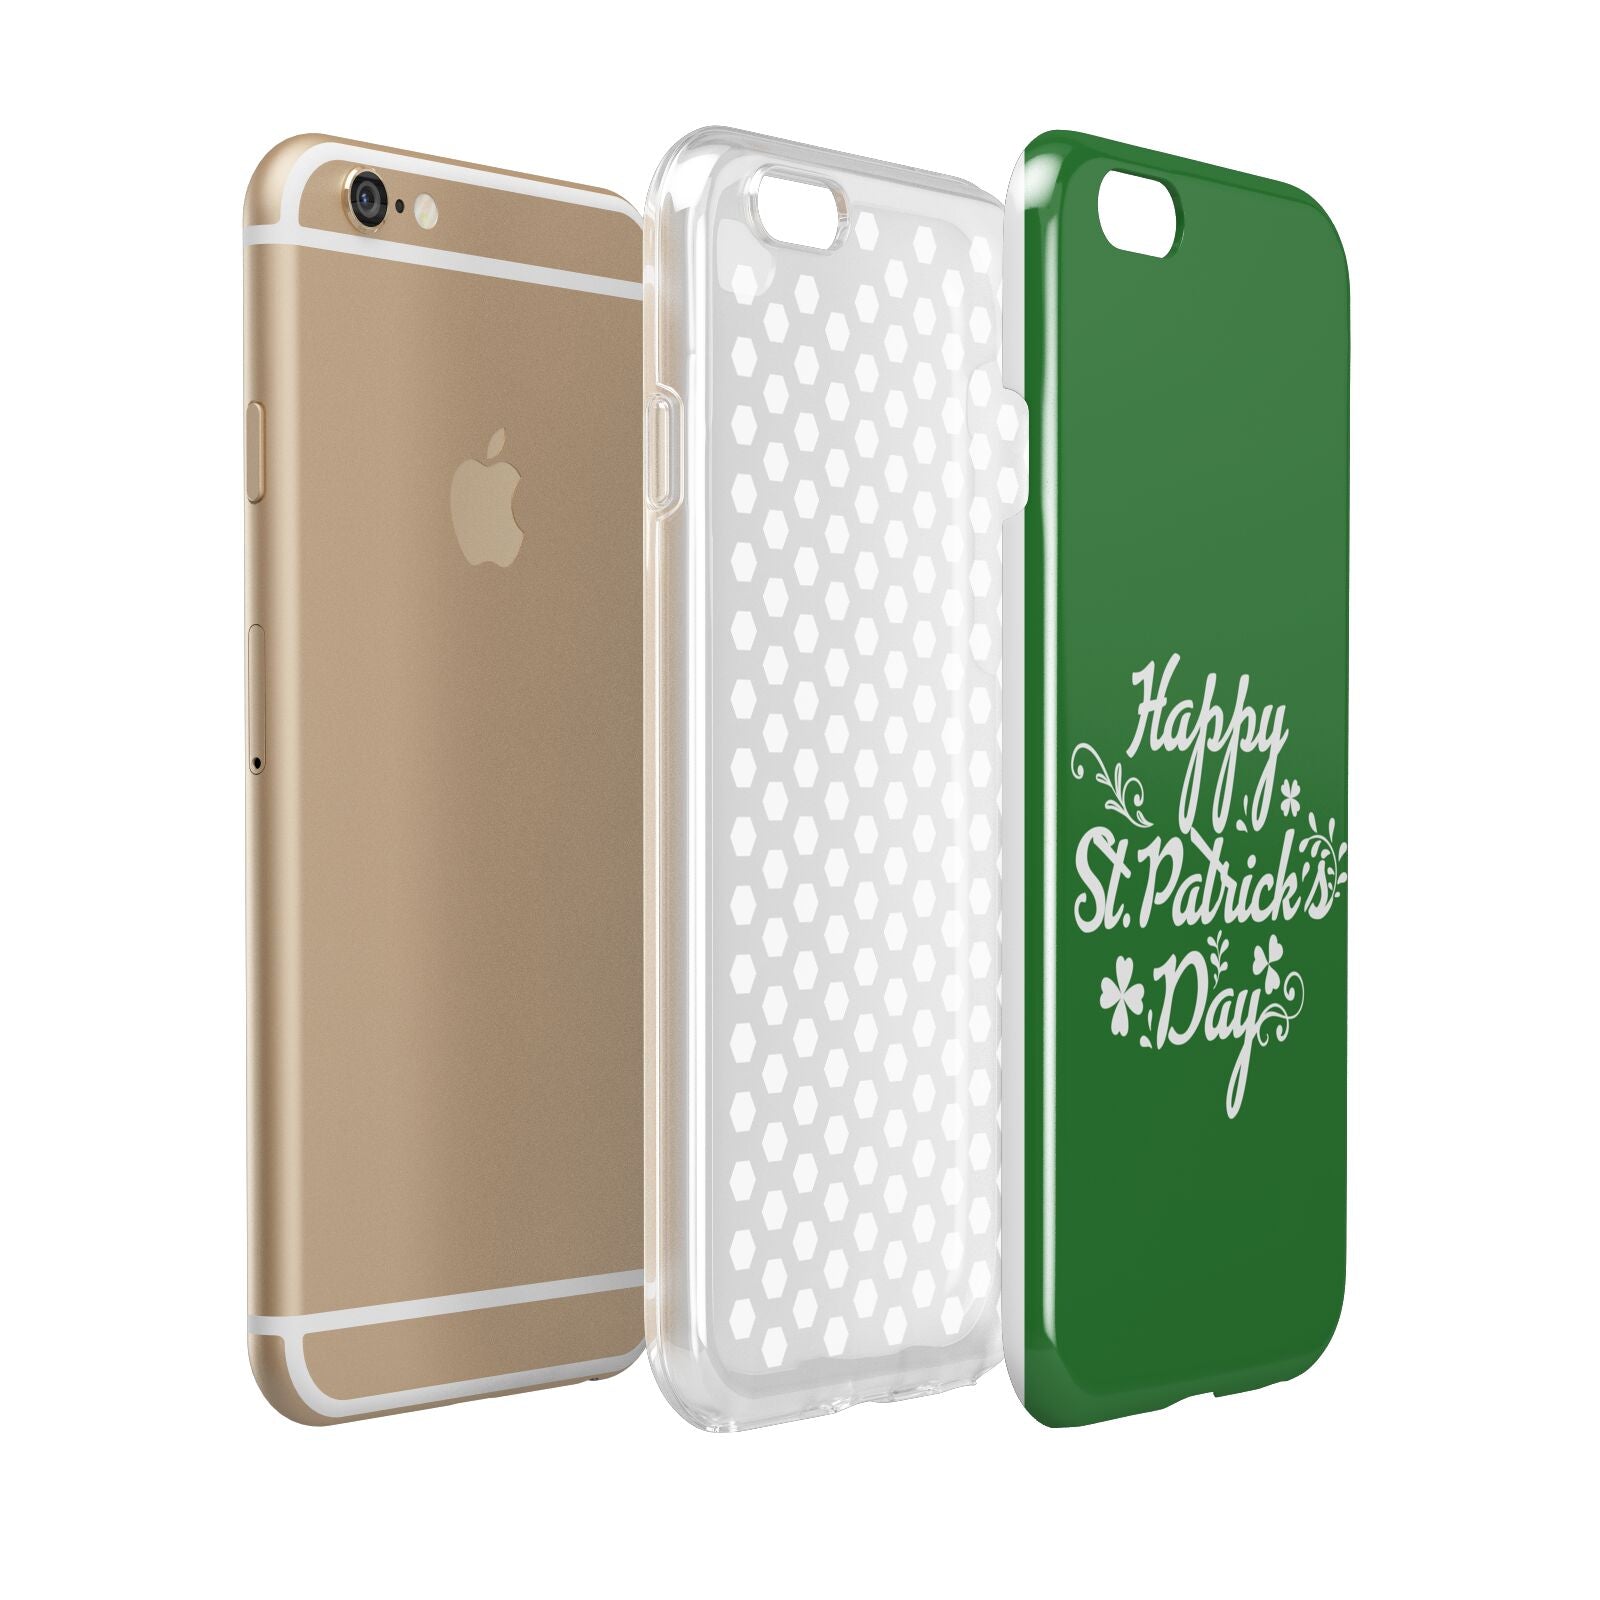 St Patricks Day Apple iPhone 6 3D Tough Case Expanded view